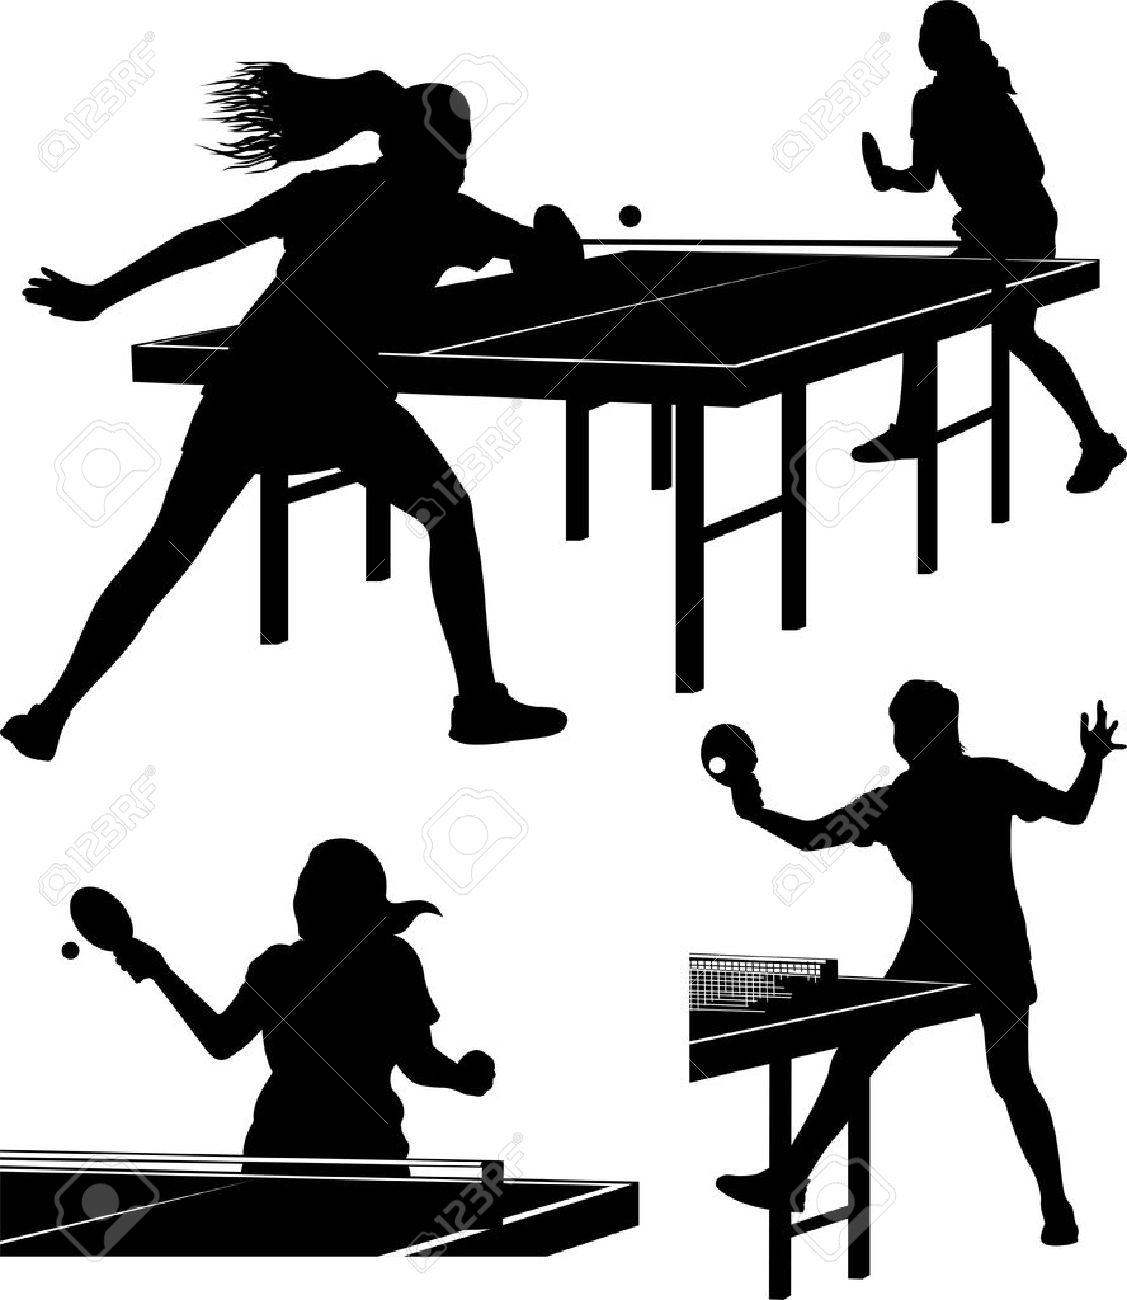 Table tennis clipart.